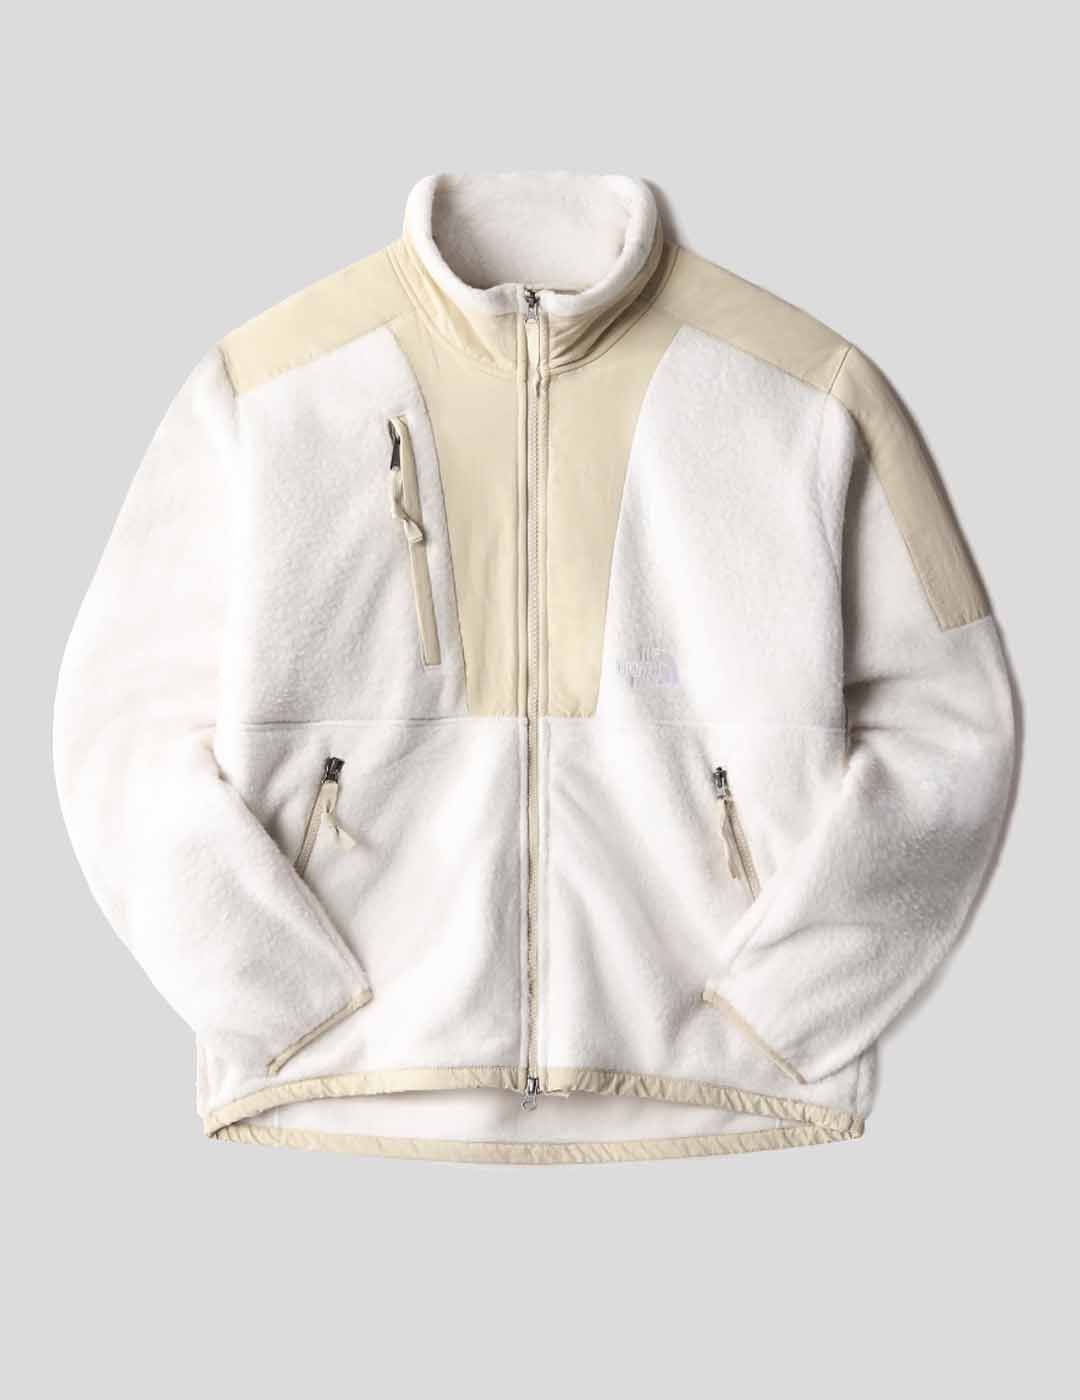 lahomia Thermal Changing Robe Jacket Anorak Fleece Lining Windbreaker Swim Poncho Coat 